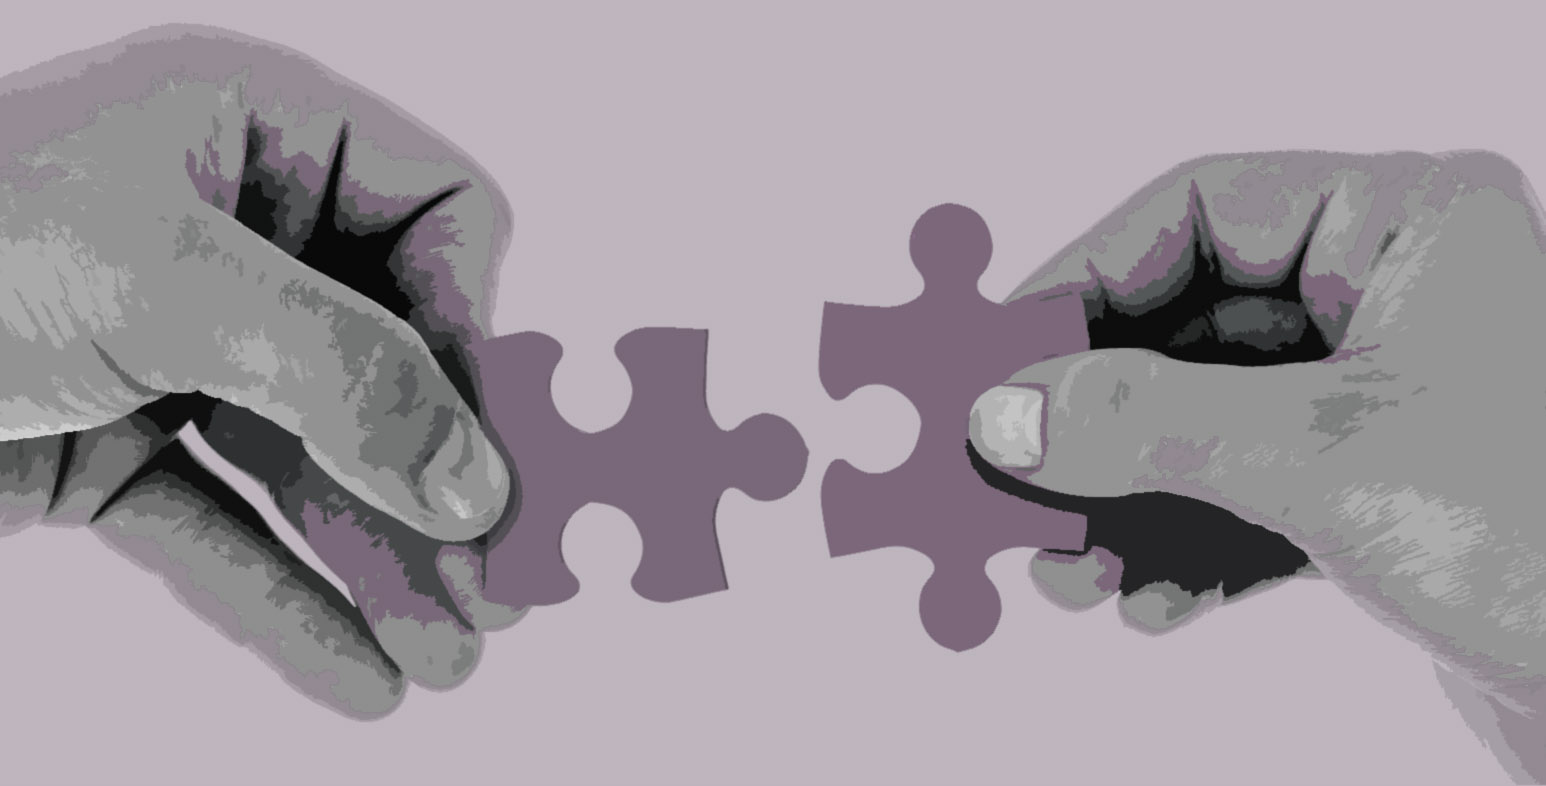 Classroom Management: Why I Love A Good Jigsaw